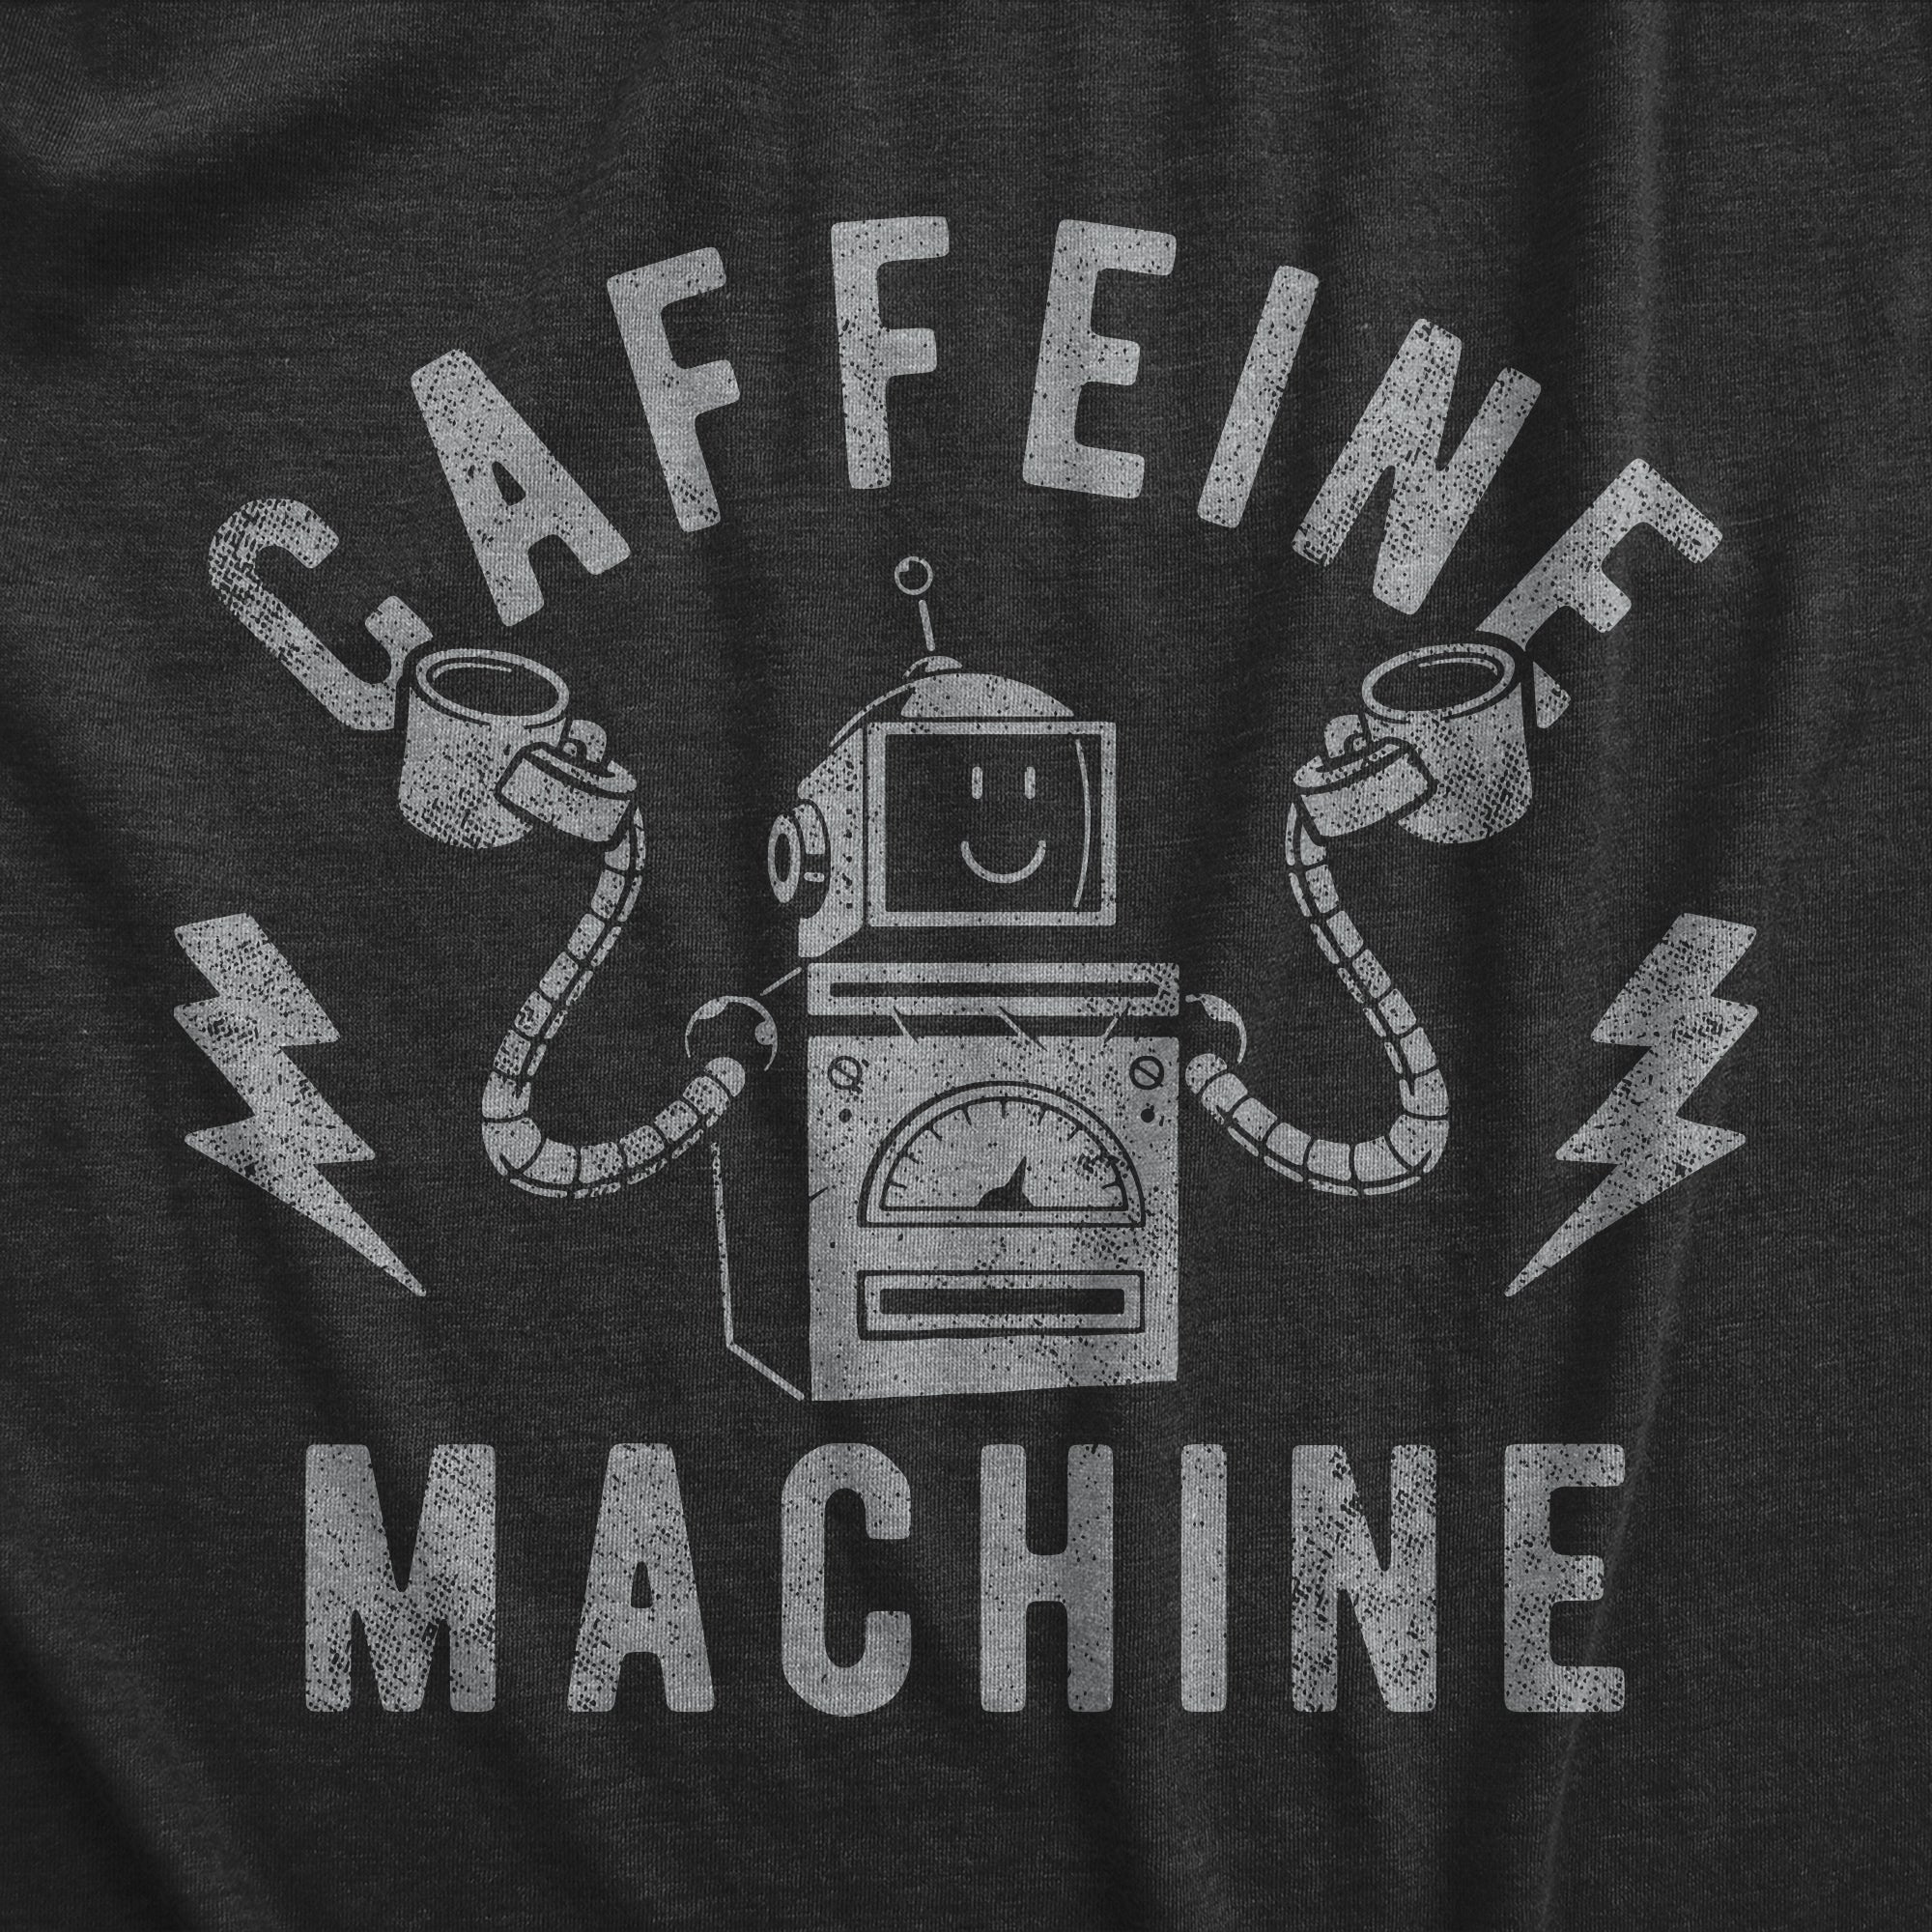 Funny Heather Black - Caffeine Machine Caffeine Machine Womens T Shirt Nerdy Coffee sarcastic Tee